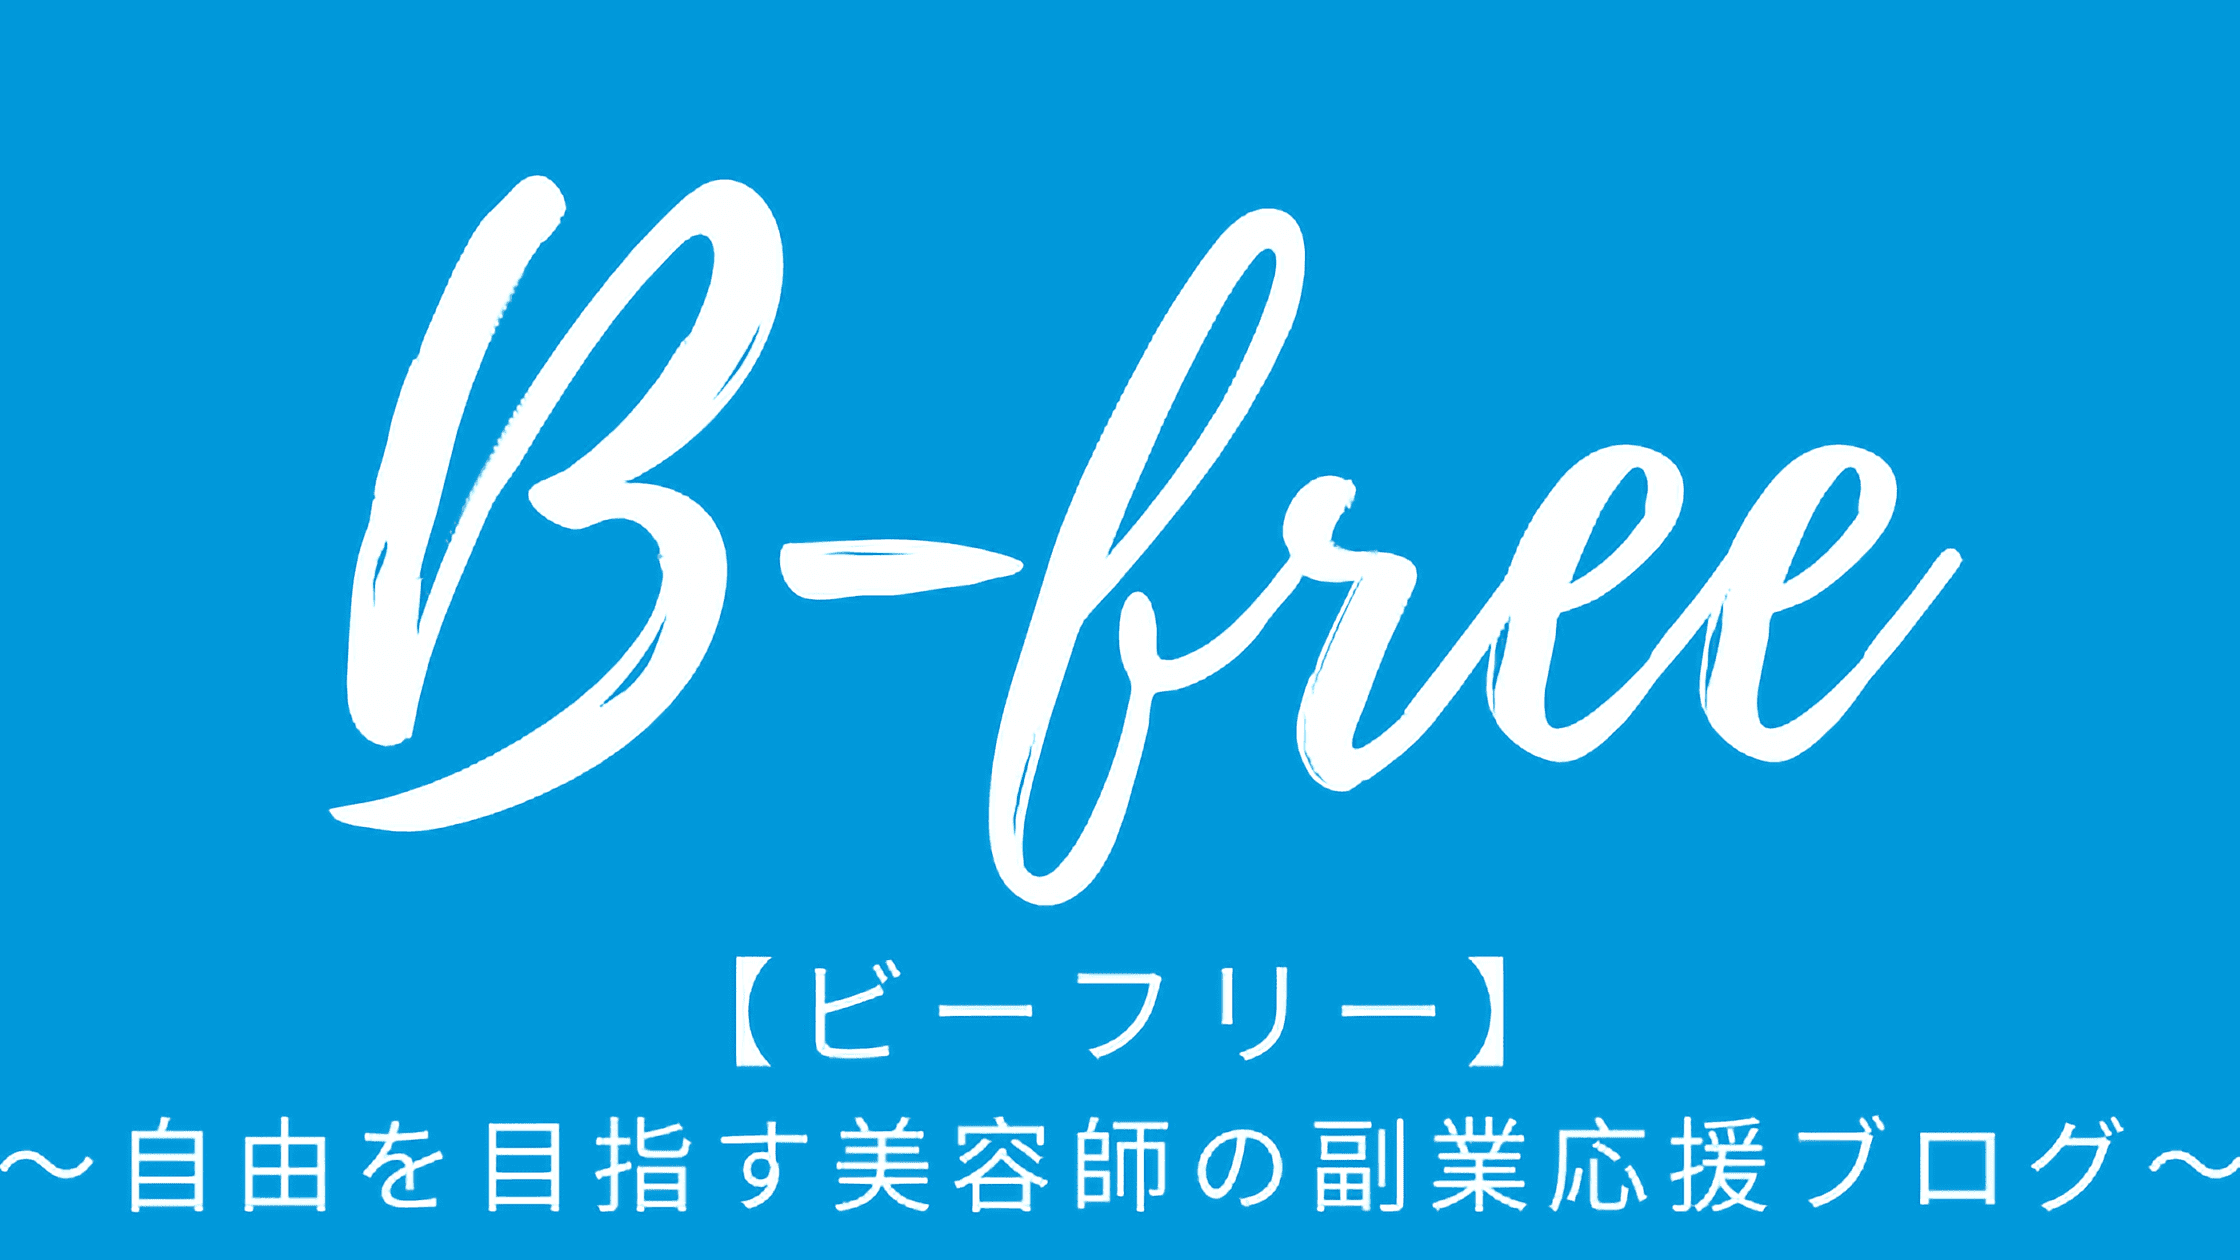 B-FREE～自由を目指す美容師の副業応援ブログ～